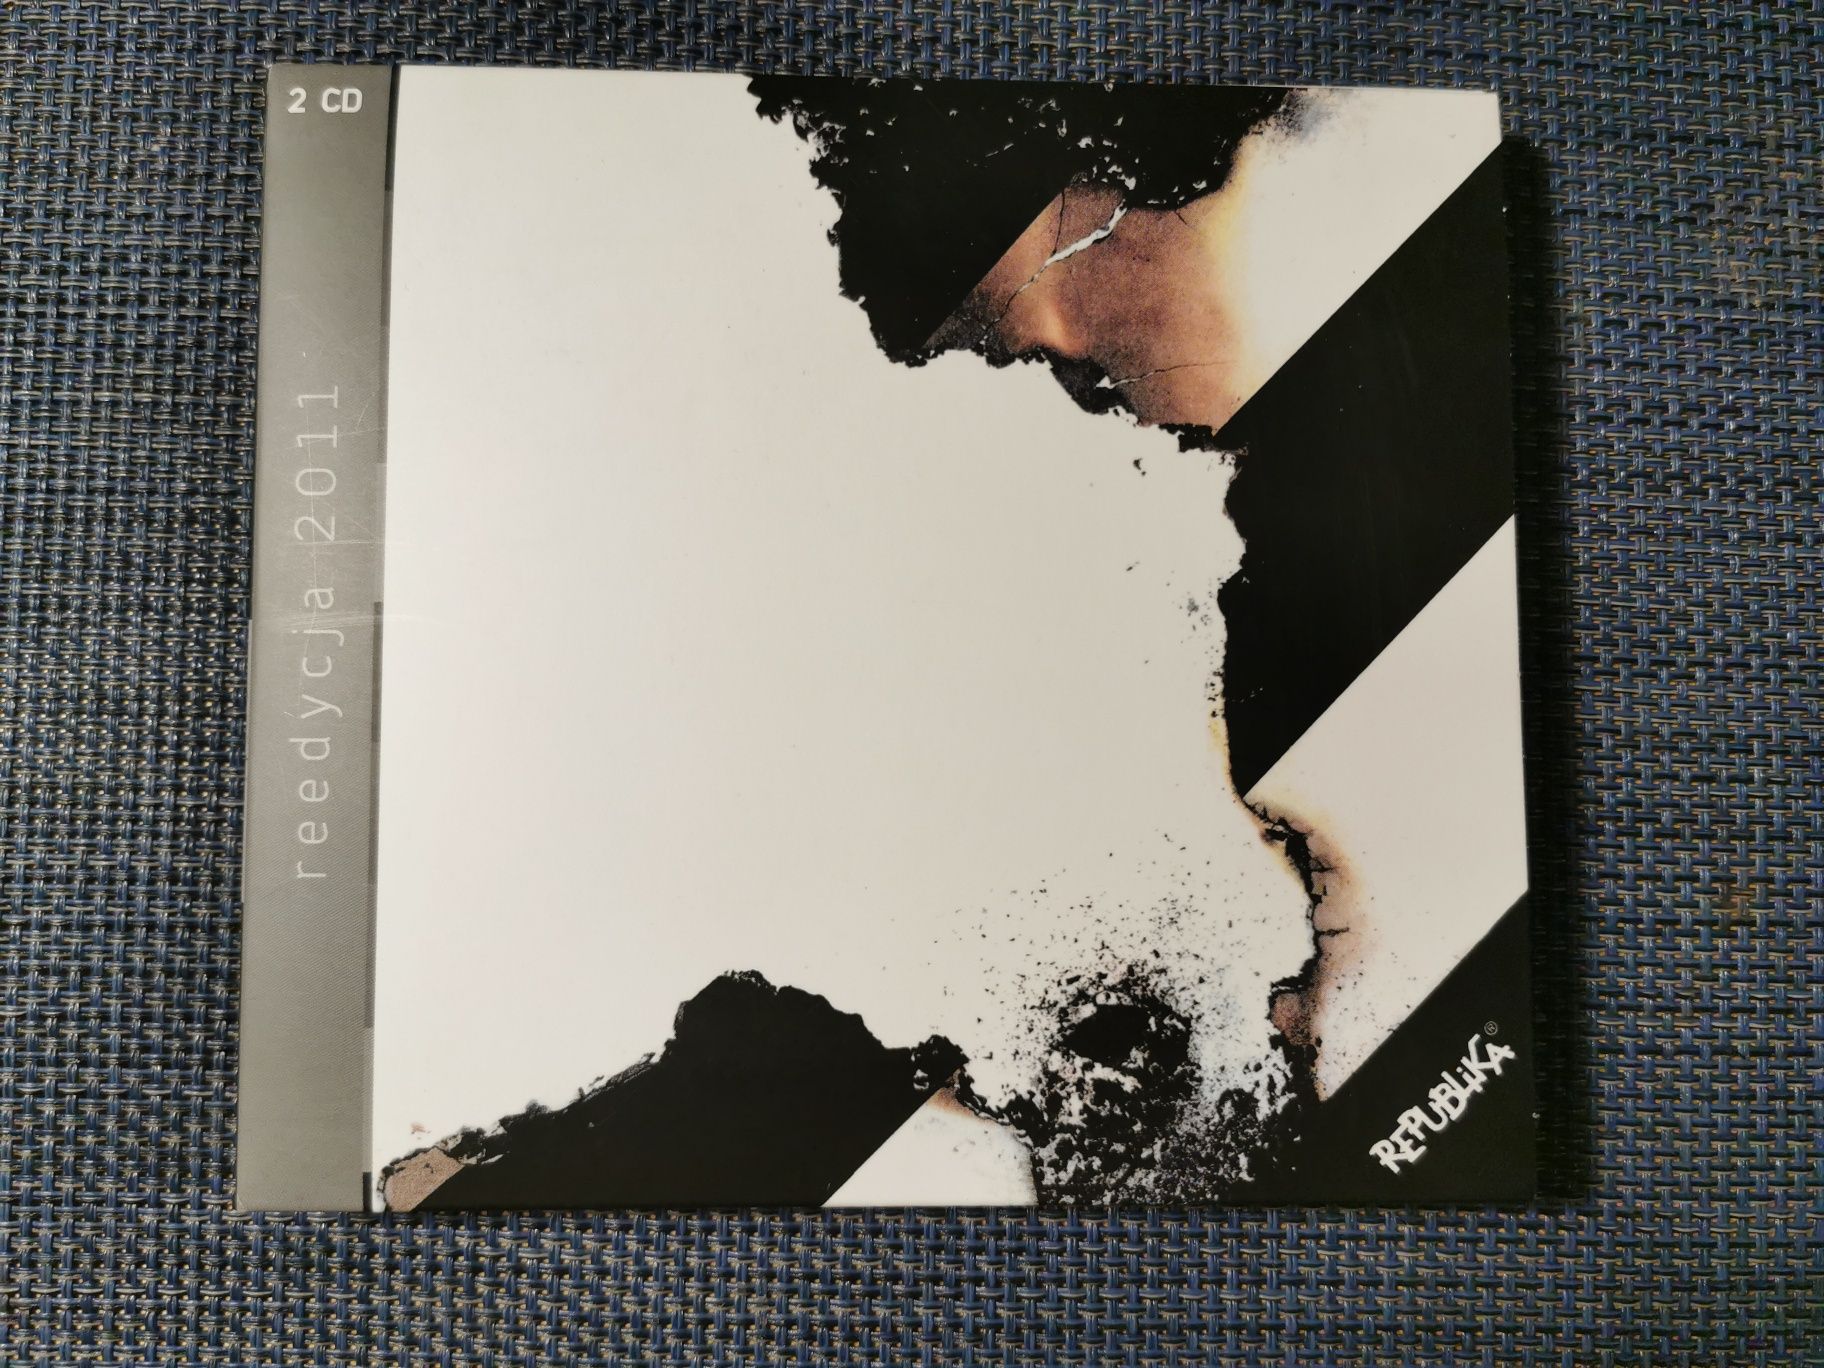 Republika - "Nieustanne tango/1984" - 2 x CD